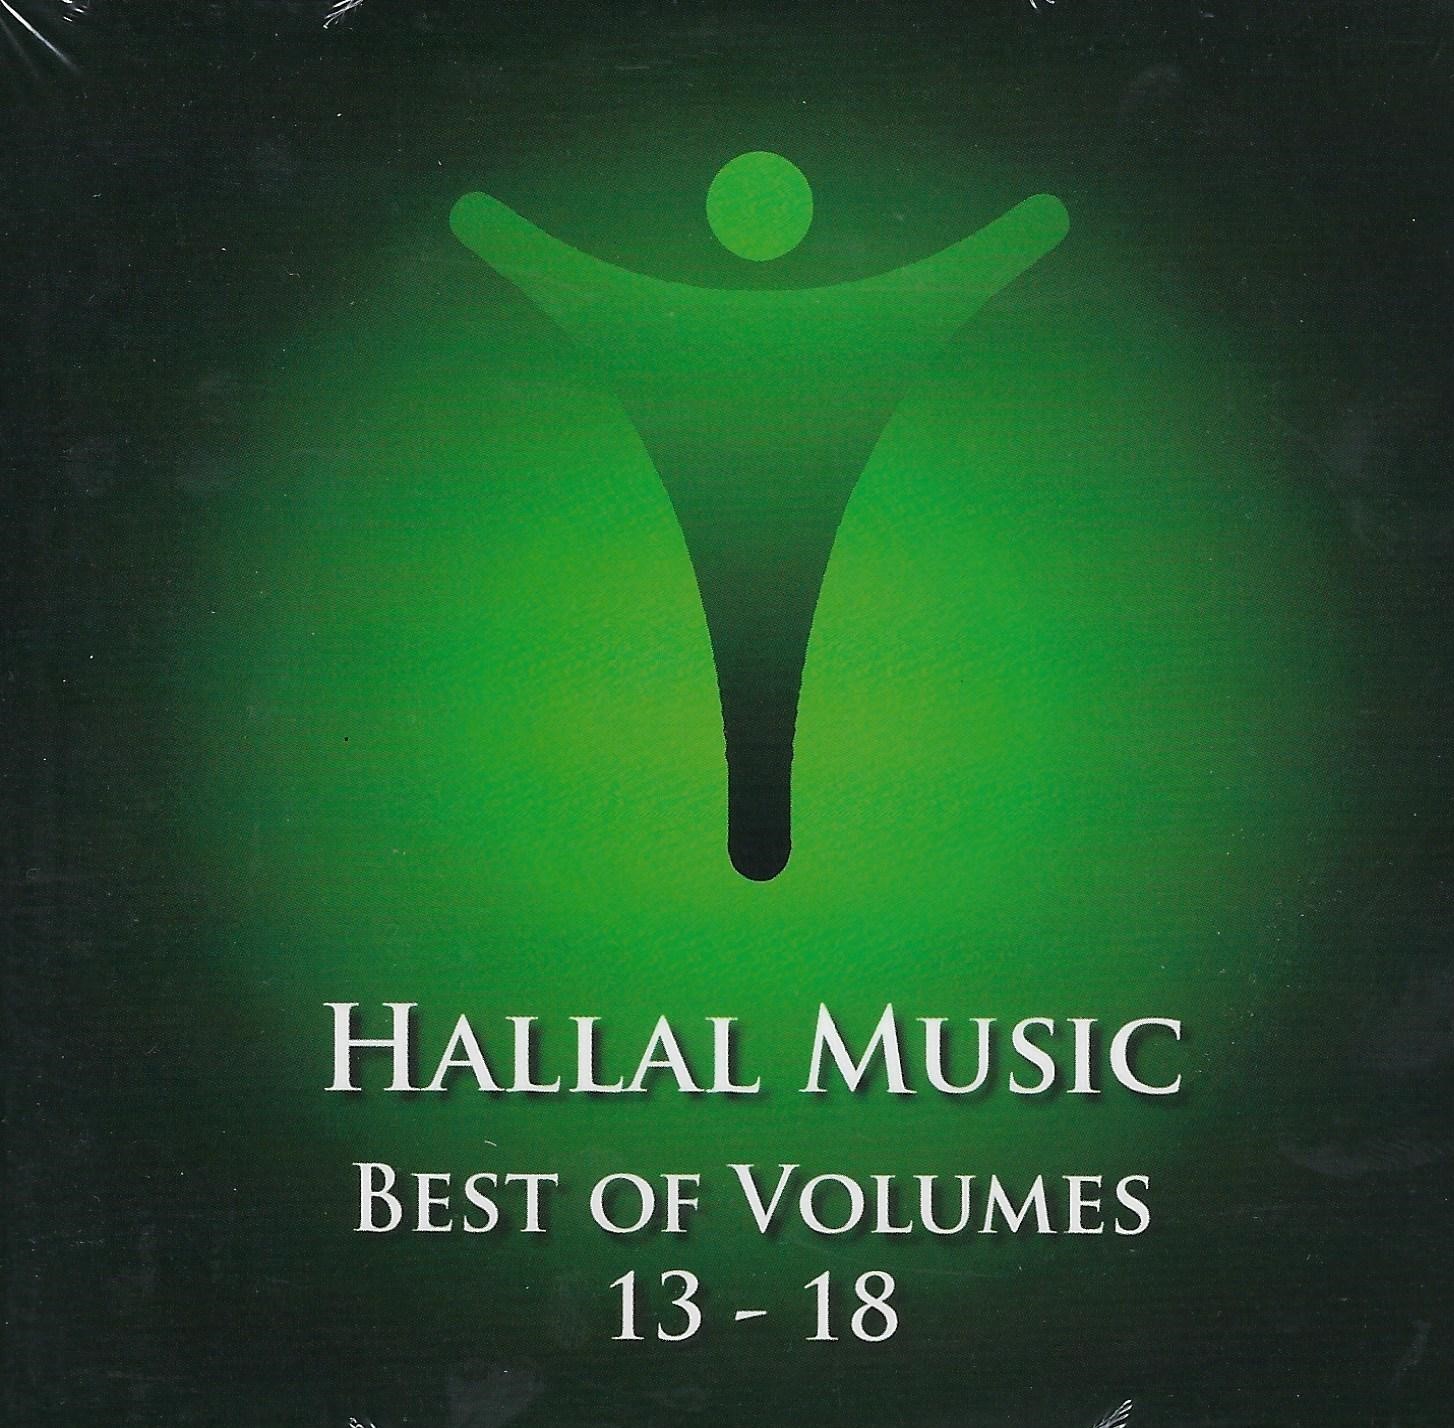 BEST OF VOLUMES 13-18 Hallal